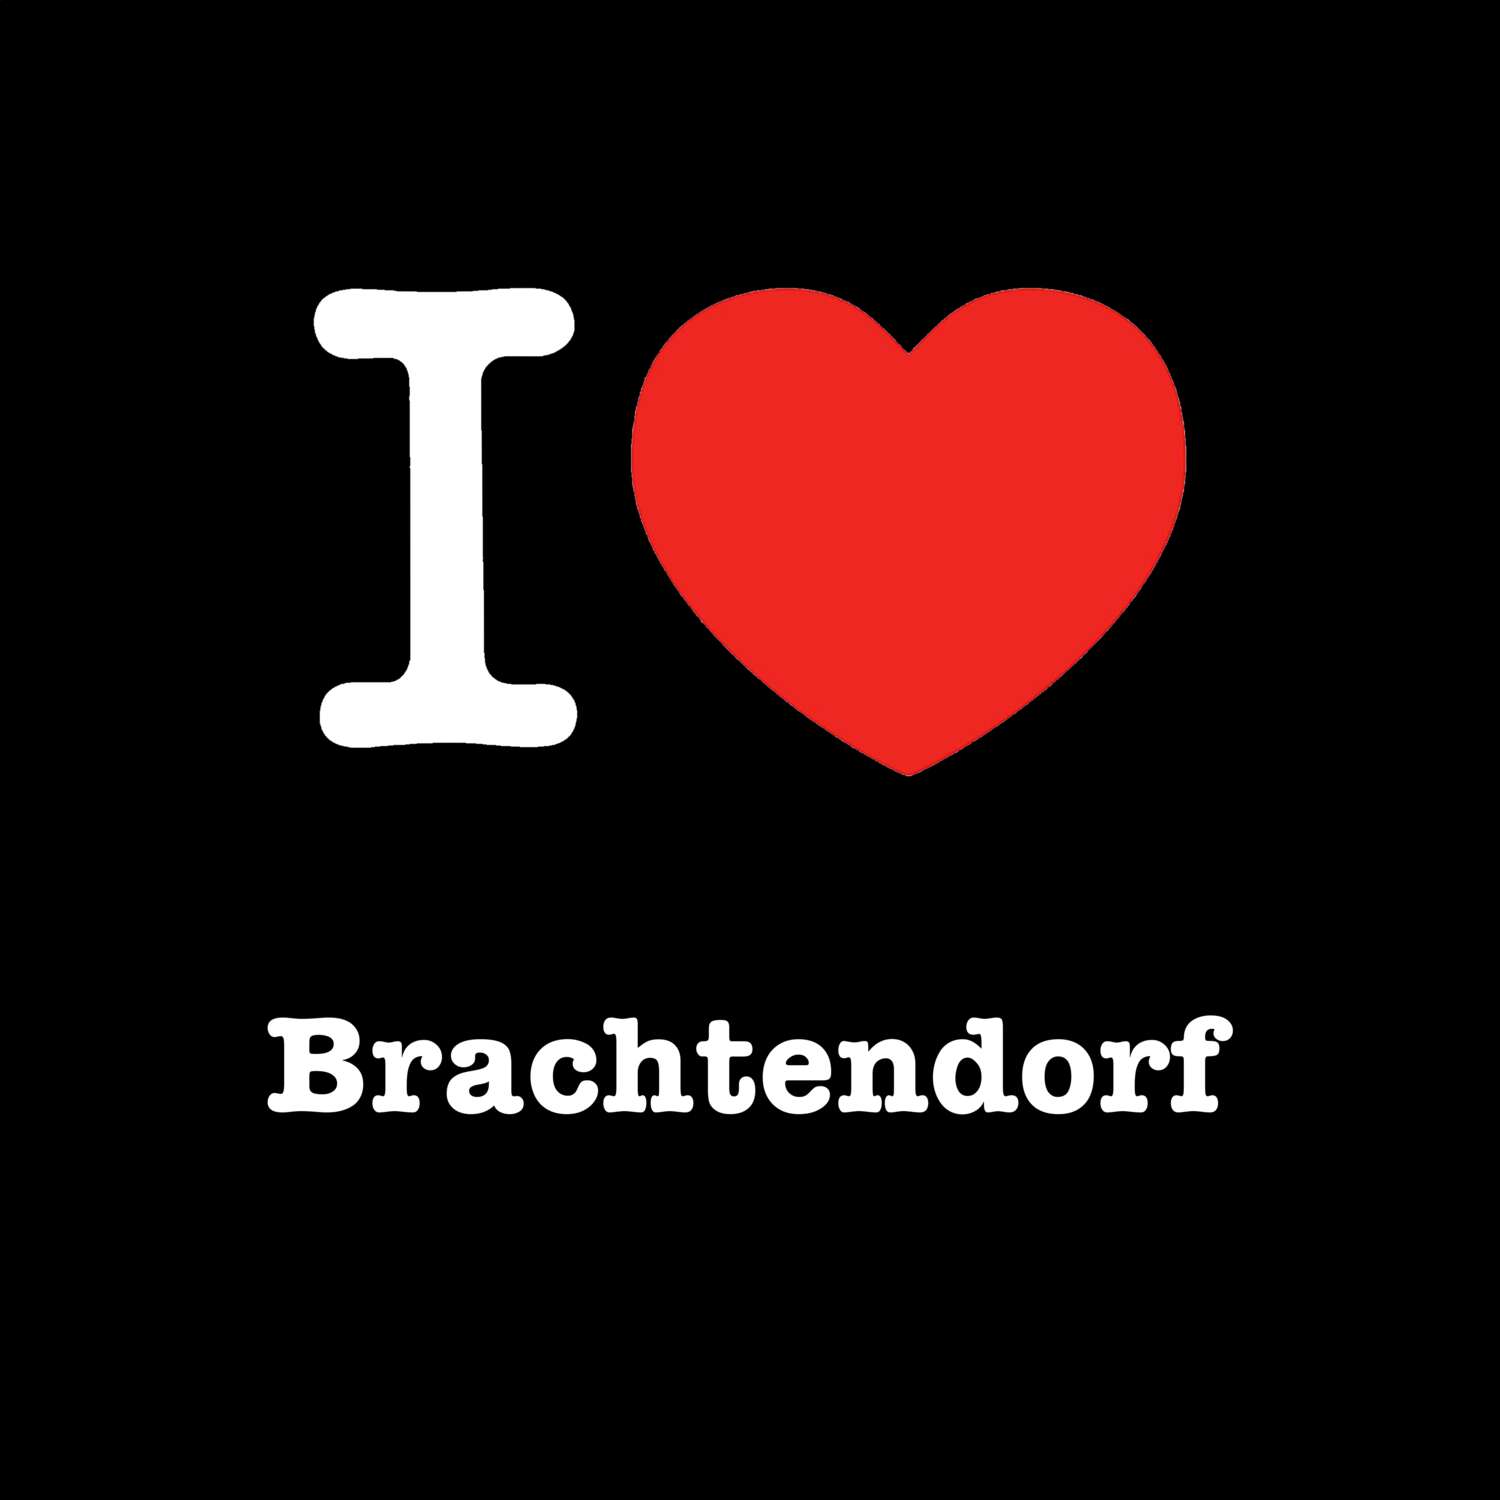 Brachtendorf T-Shirt »I love«